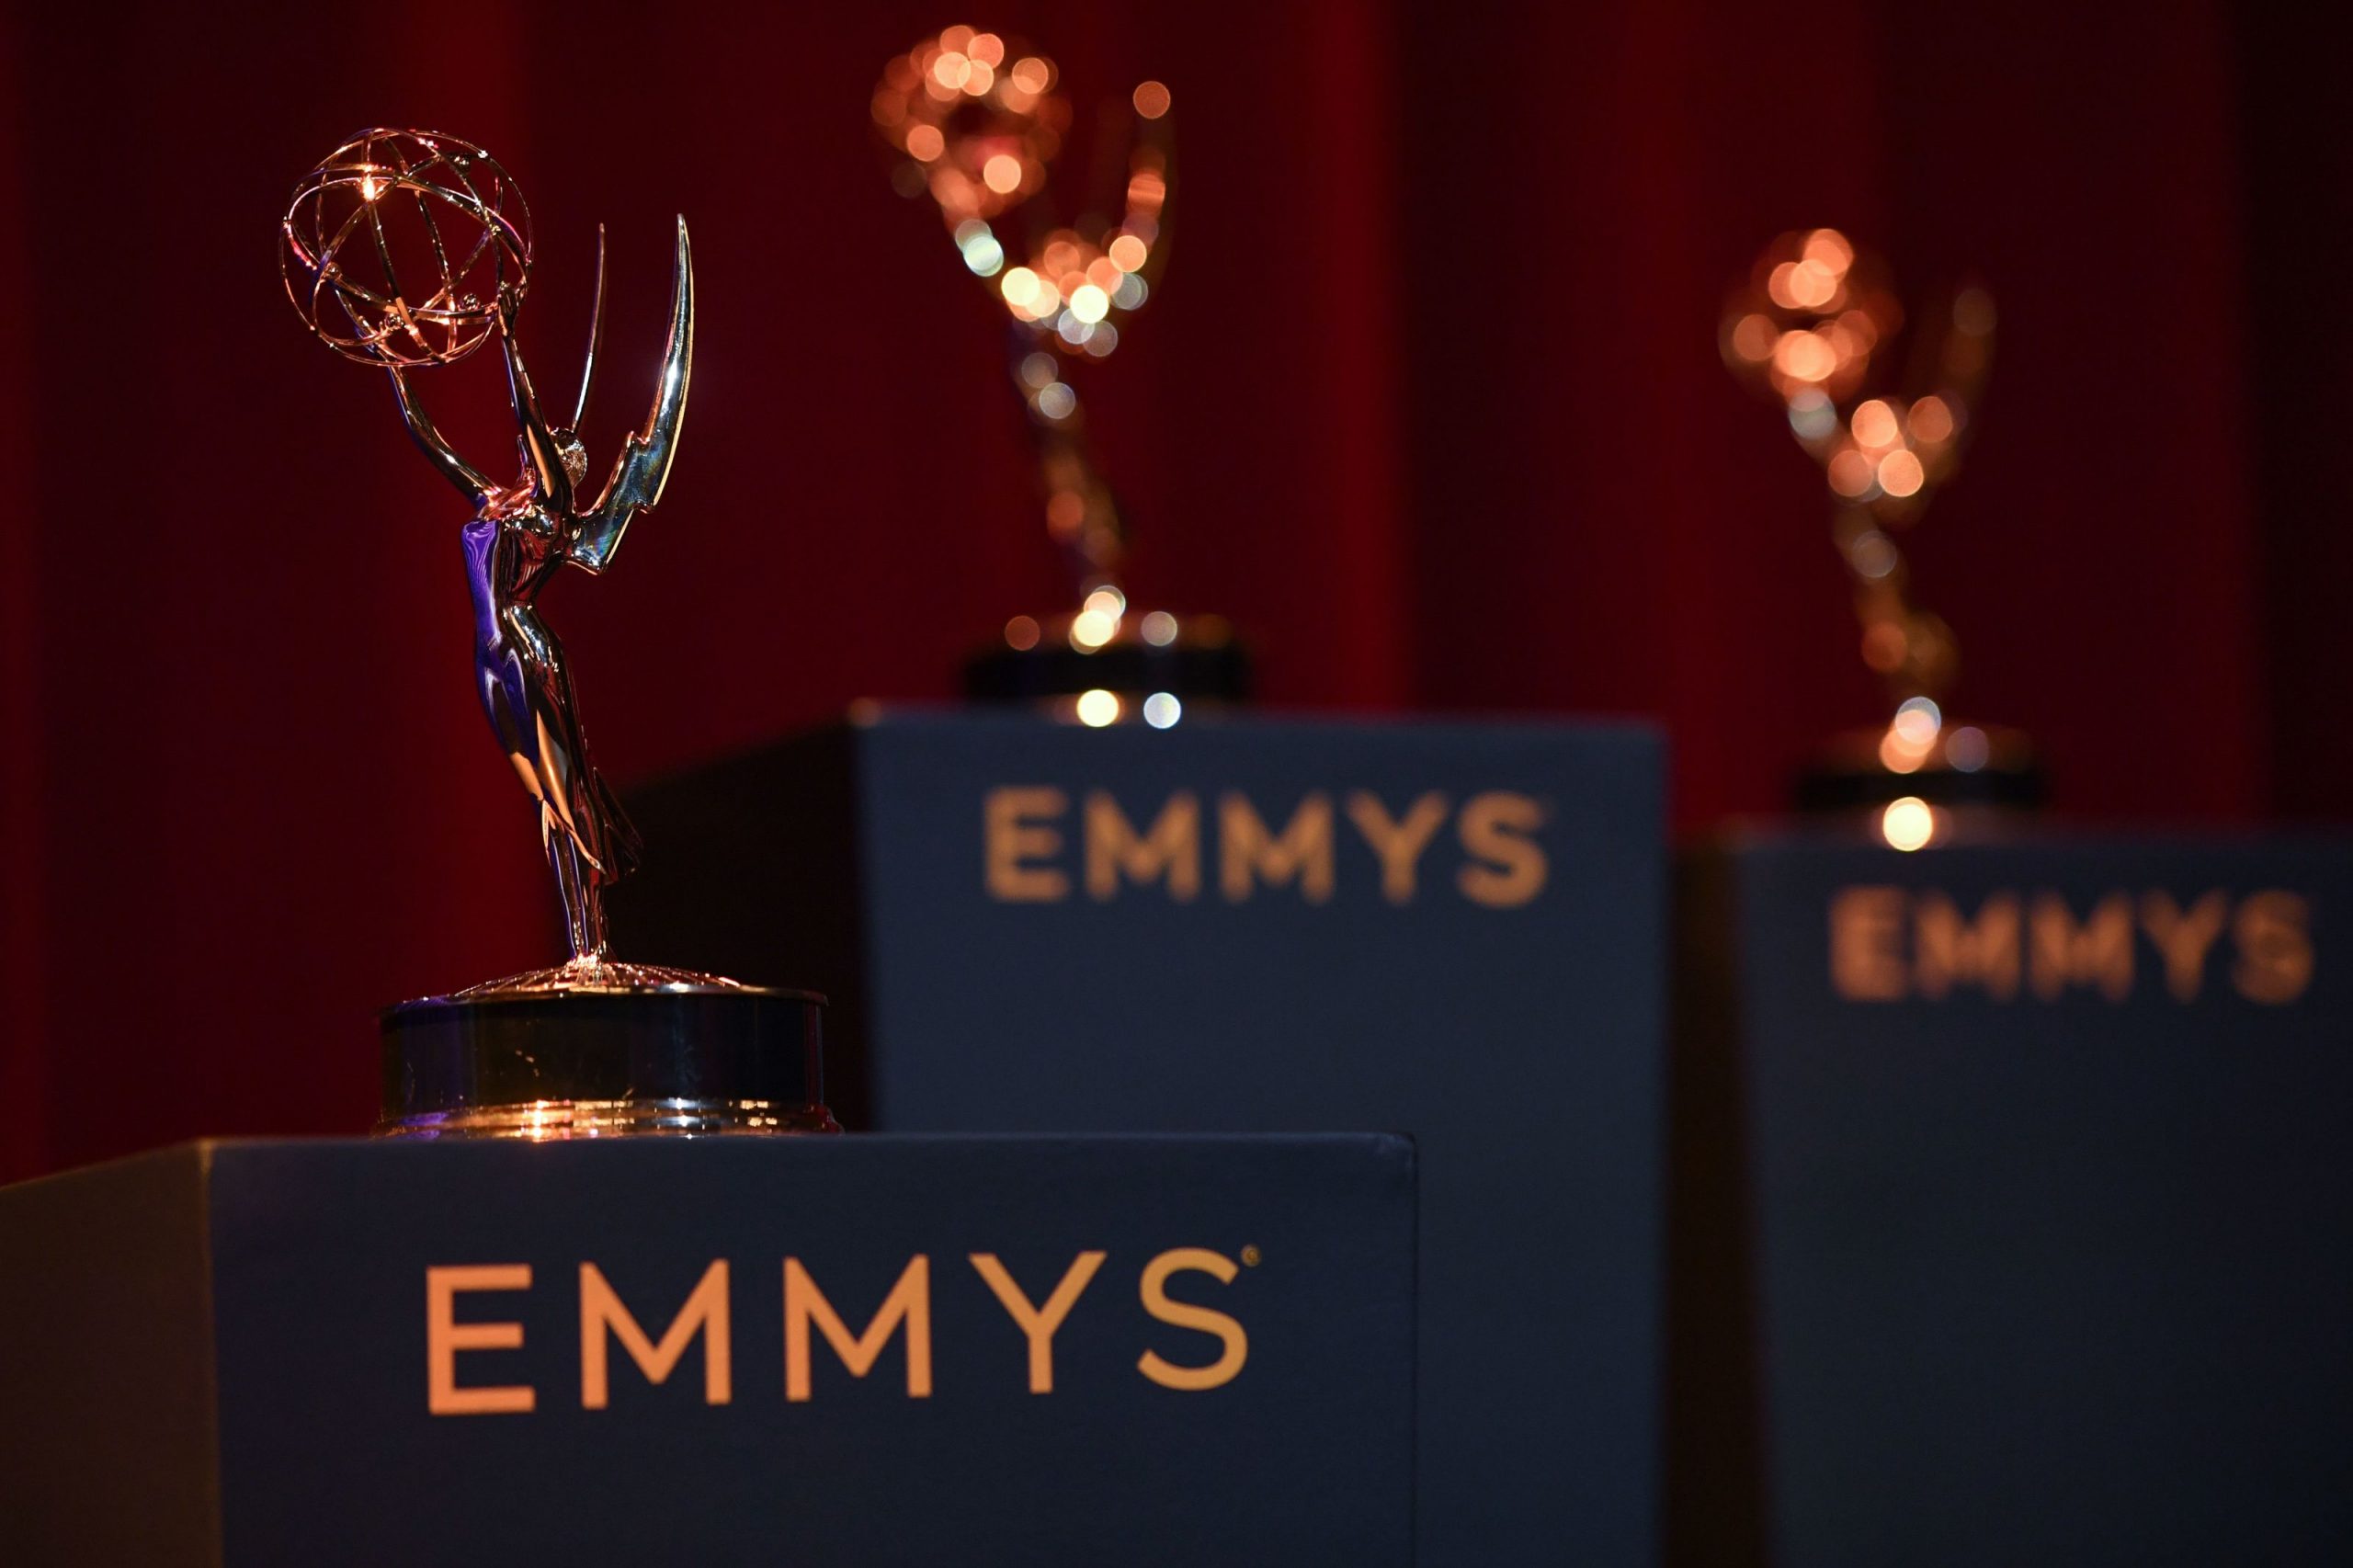 Emmys 2020 Nominations Revealed